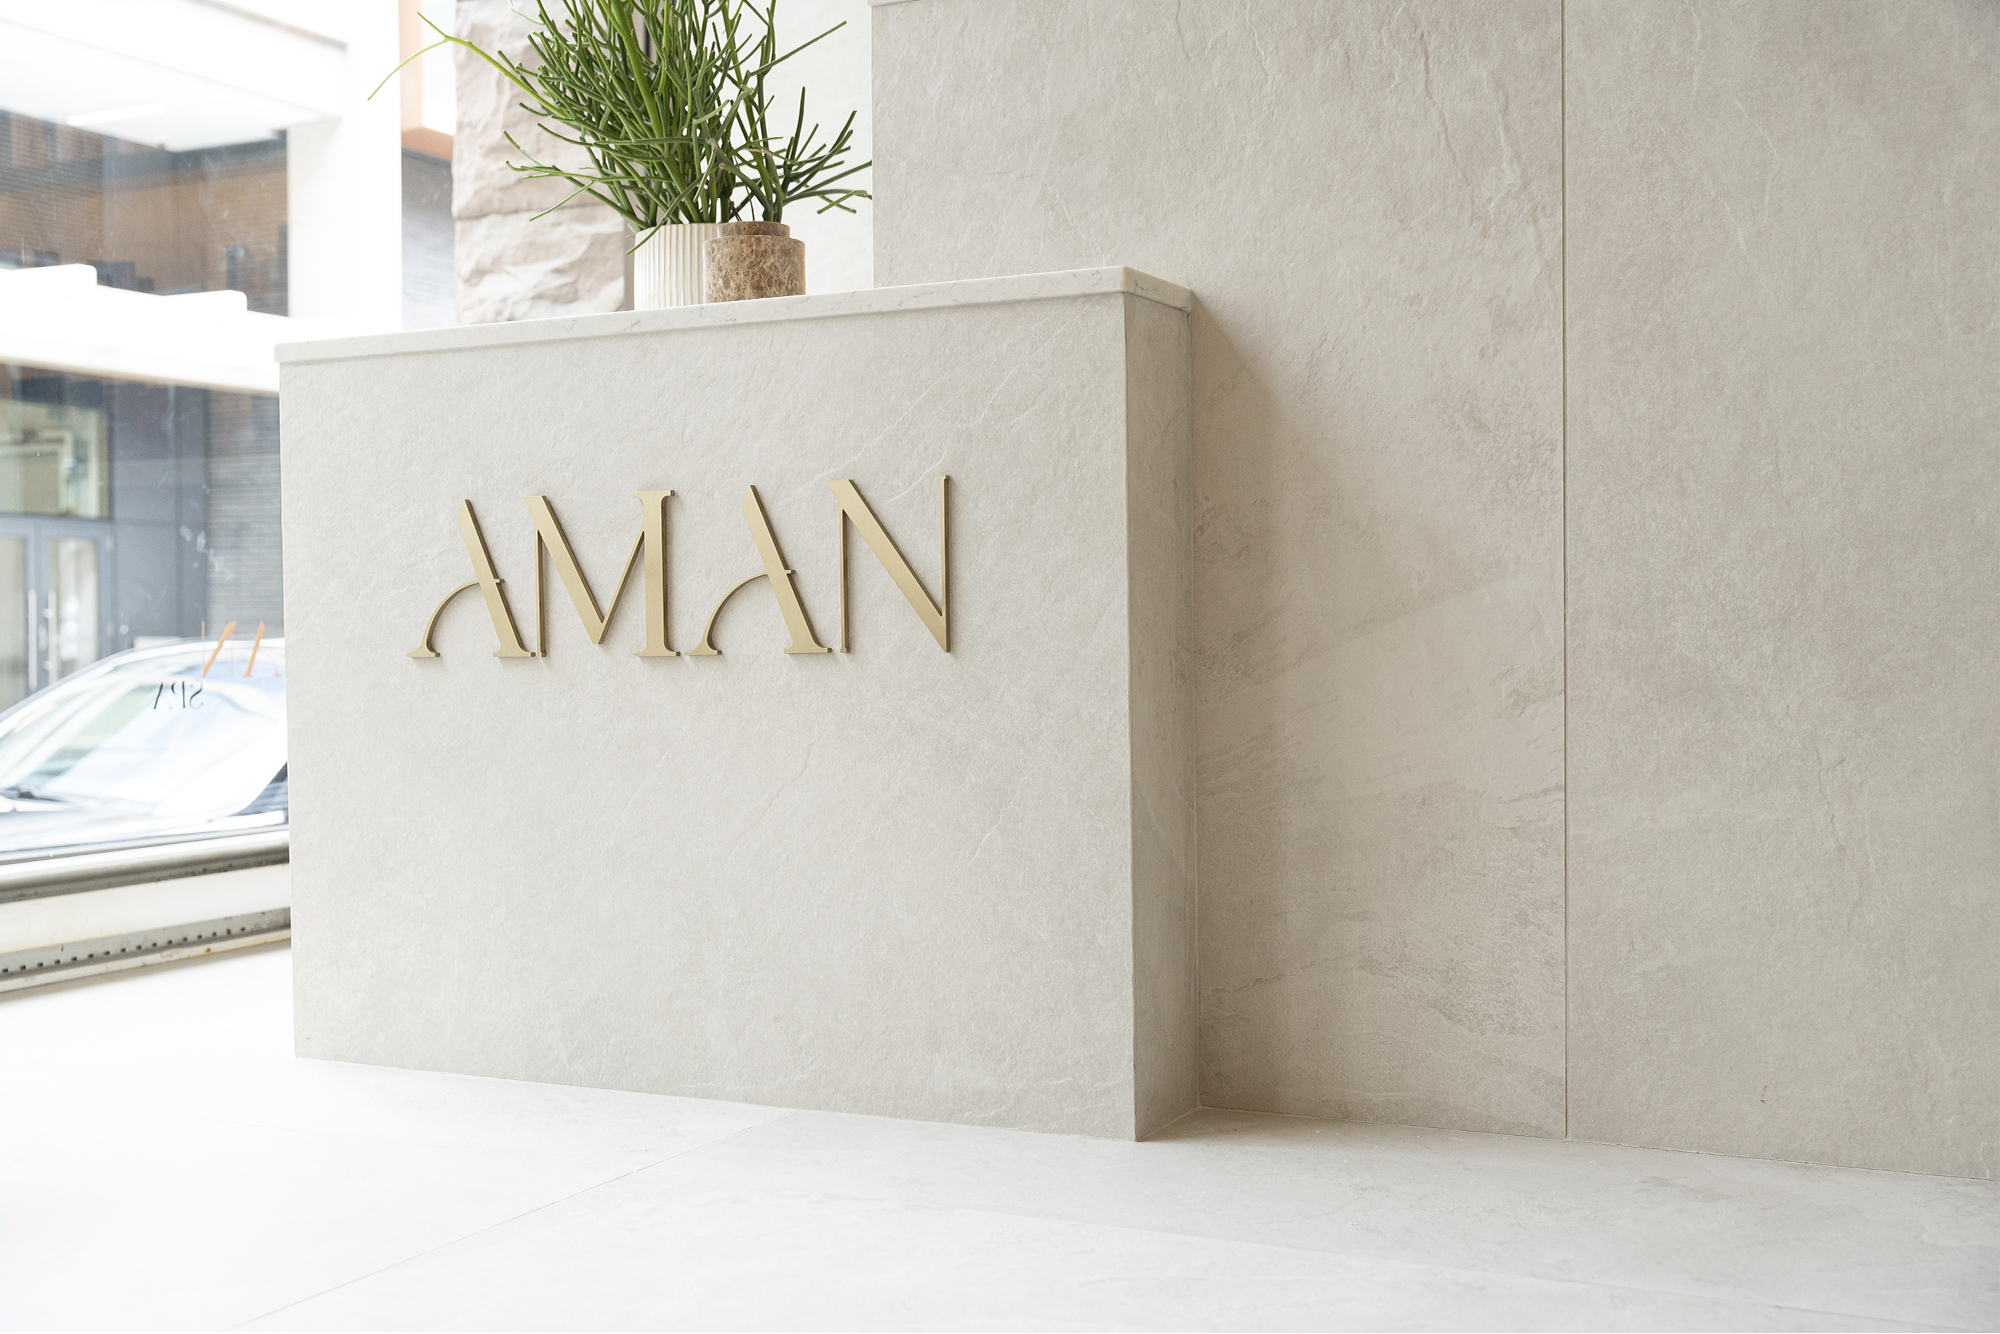 Aman Spa front desk in white stone